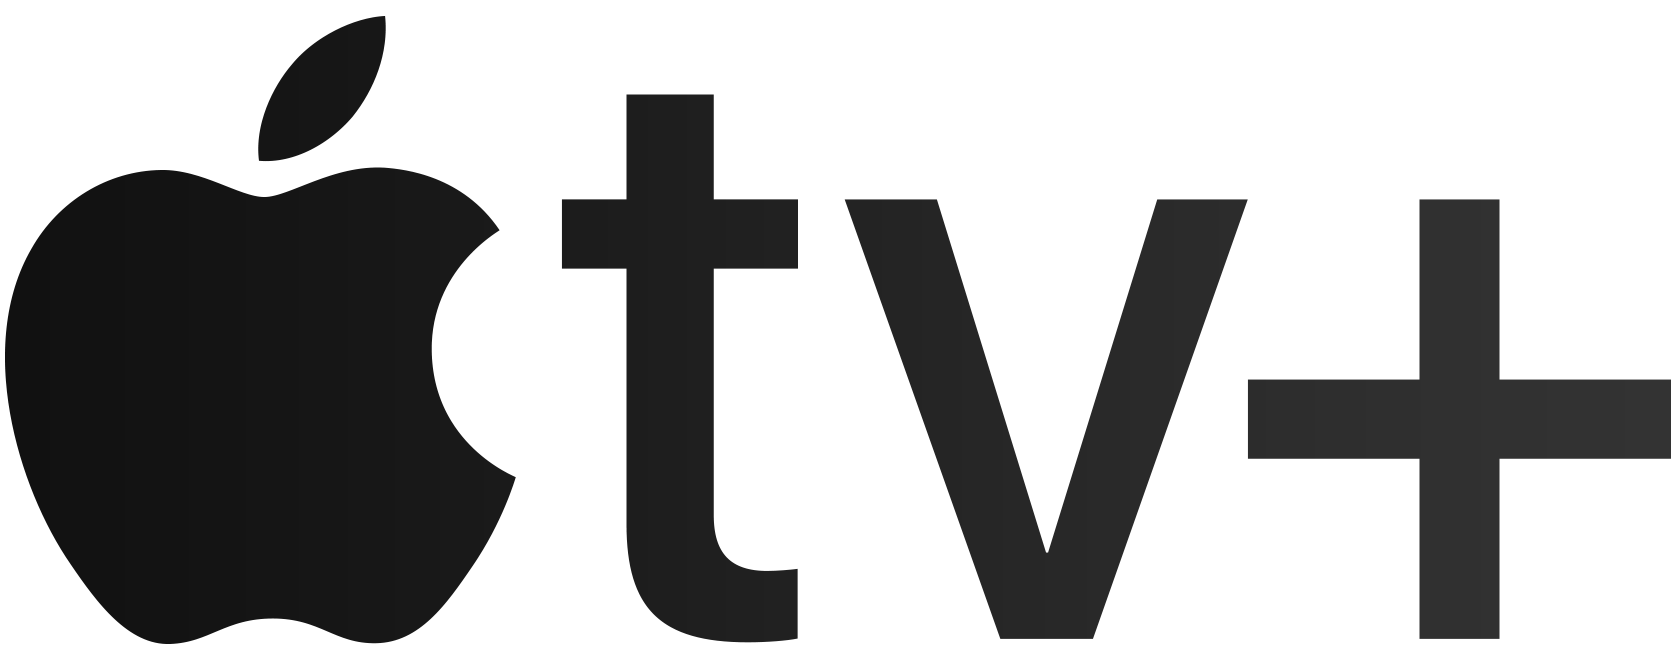 Apple_tv + _logo.png.